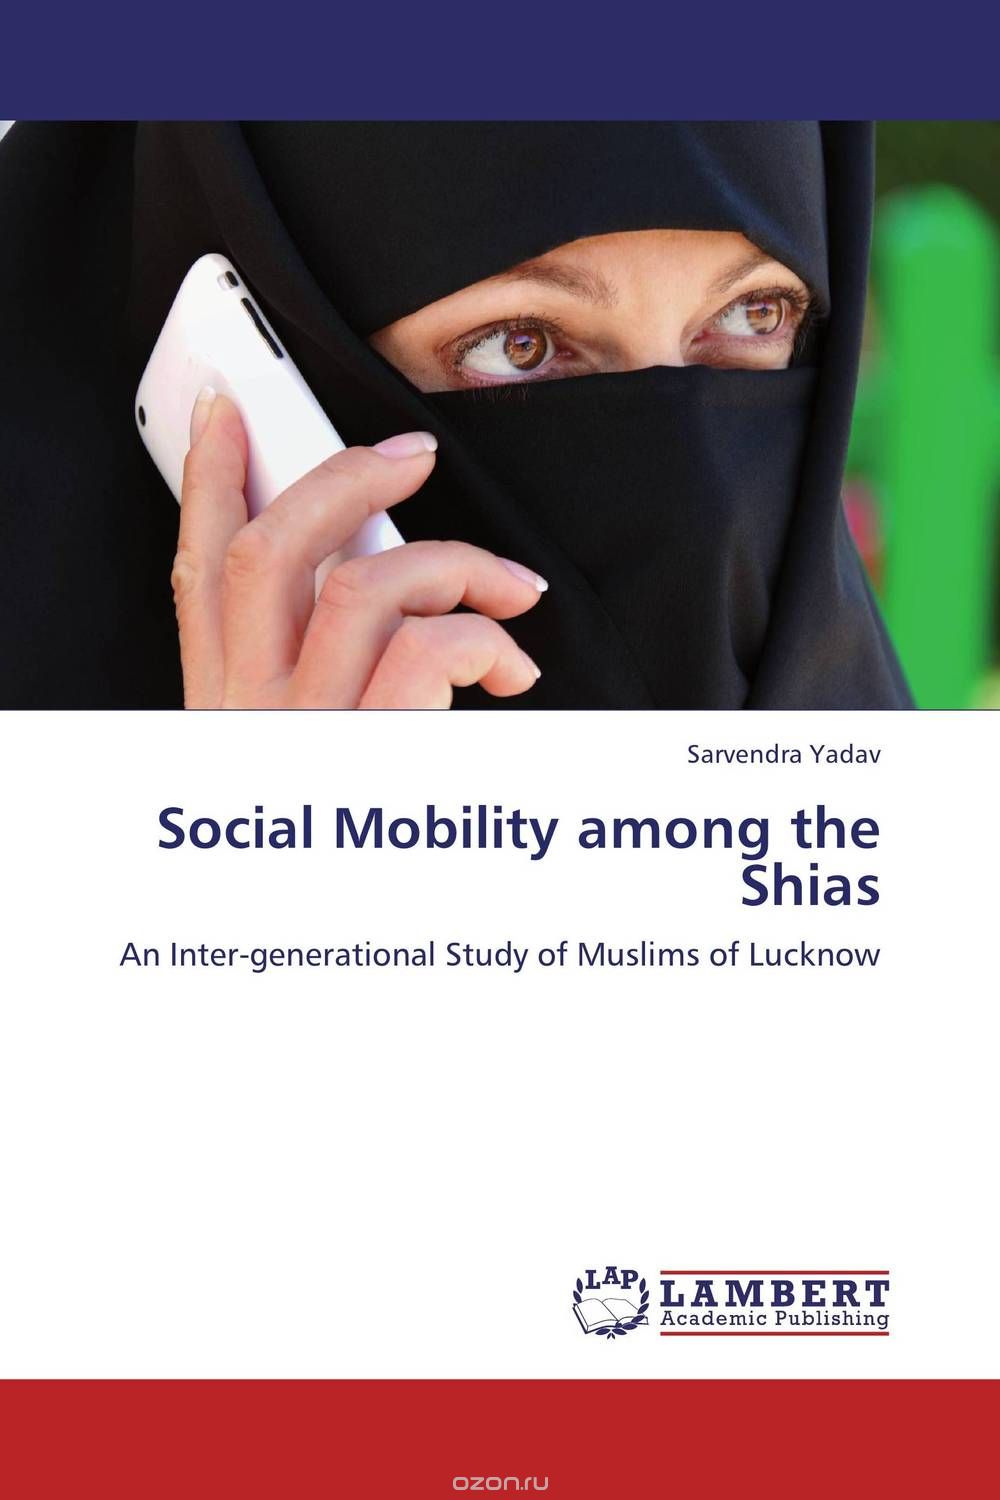 Скачать книгу "Social Mobility among the Shias"